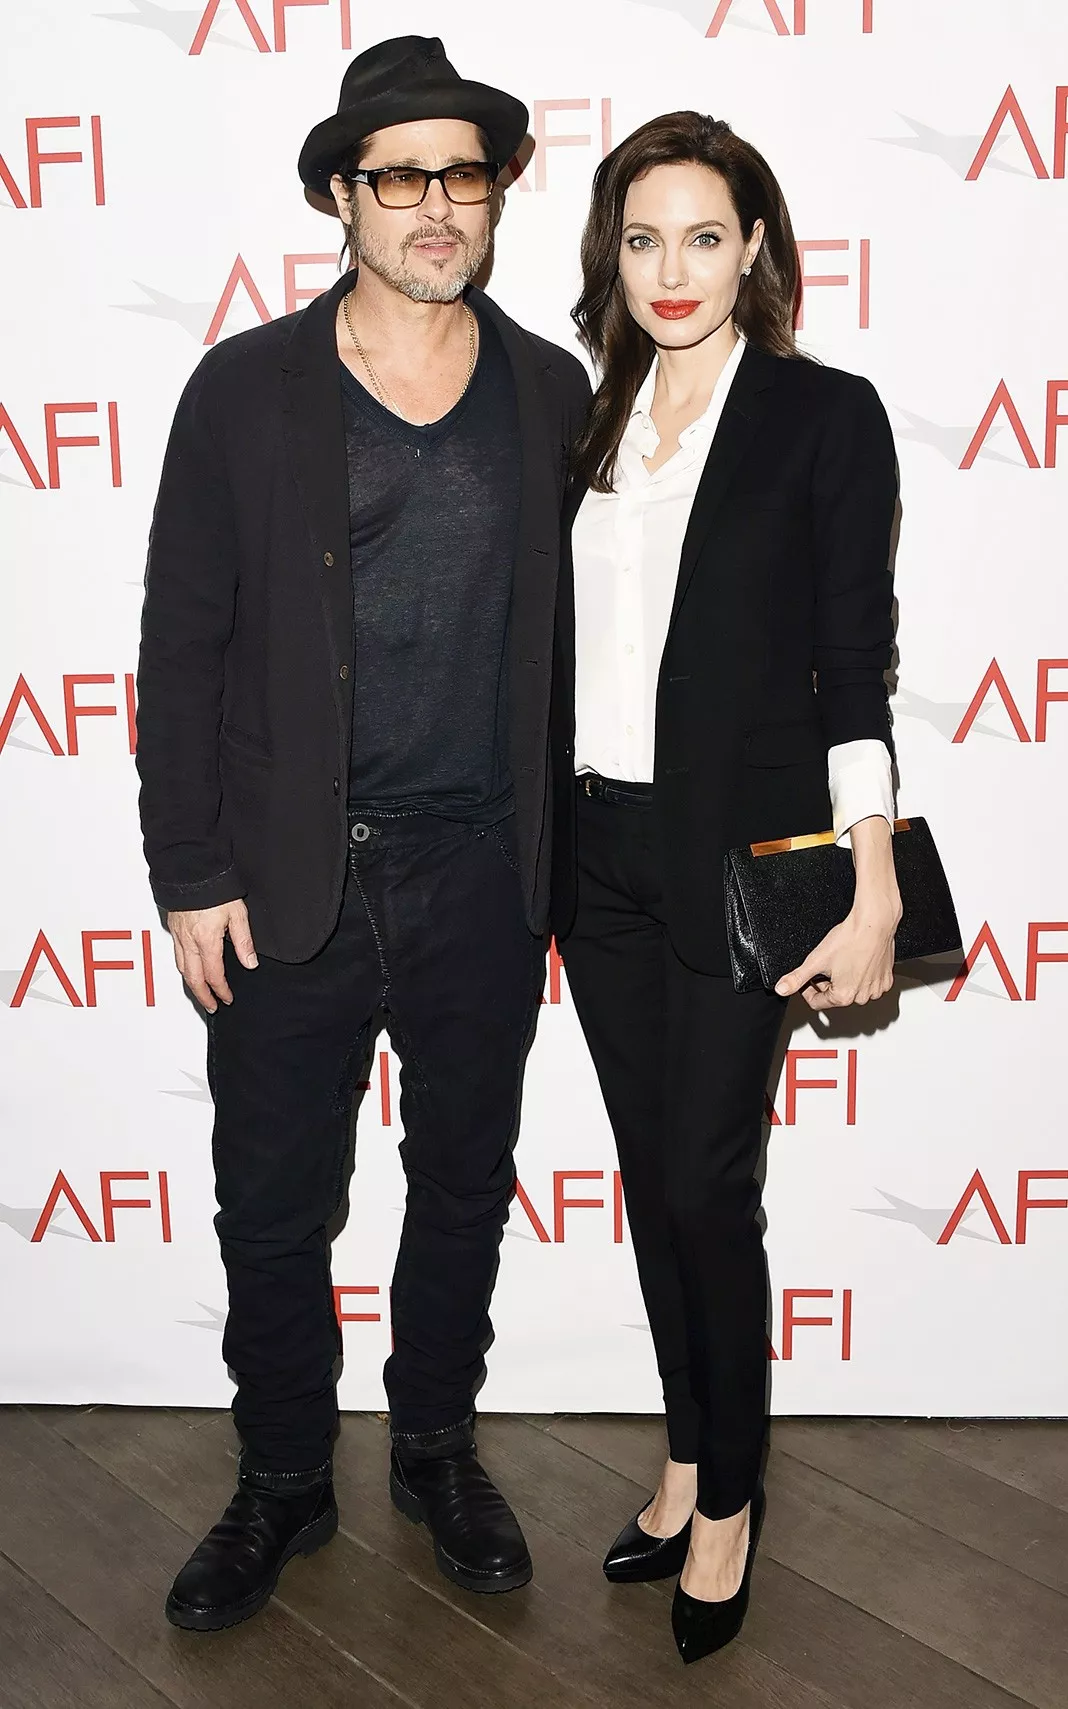 Брэд Питт, Анджелина Джоли на церемонии 15th Annual AFI Awards в Лос-Анджелесе, 9 января 2015 г.